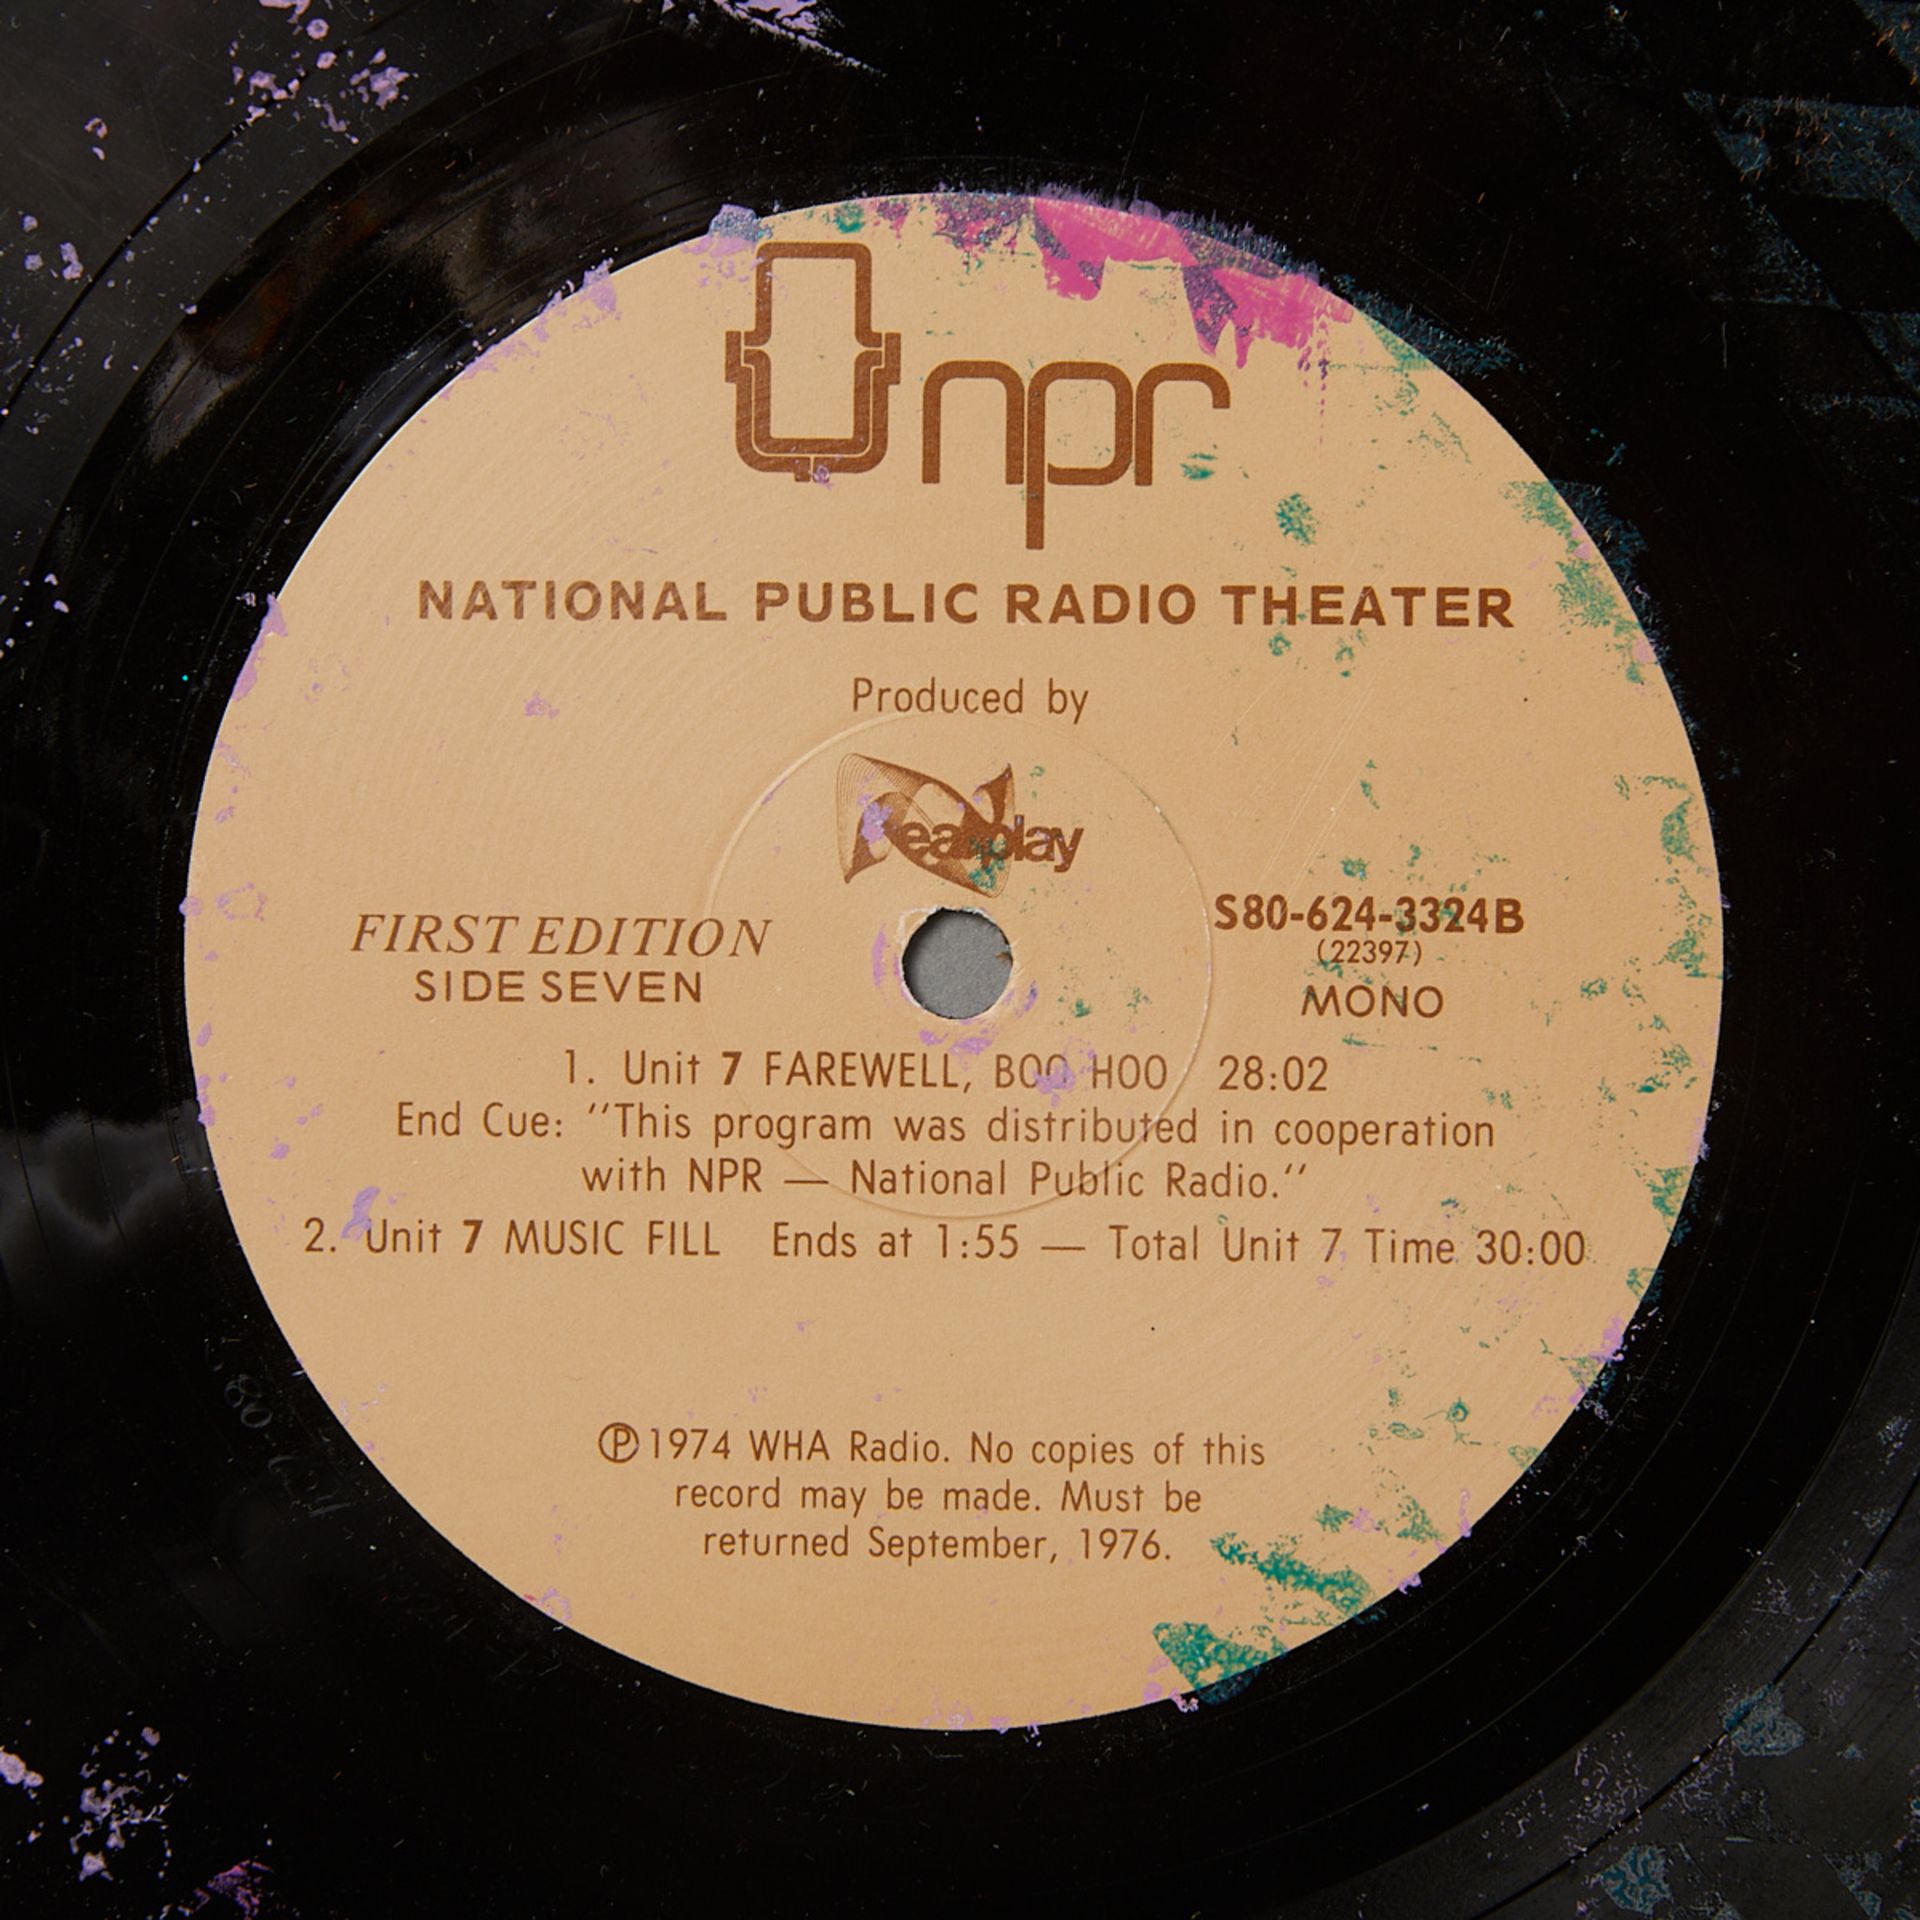 William Weege Mixed Media on Vinyl Record 1976 - Image 5 of 8